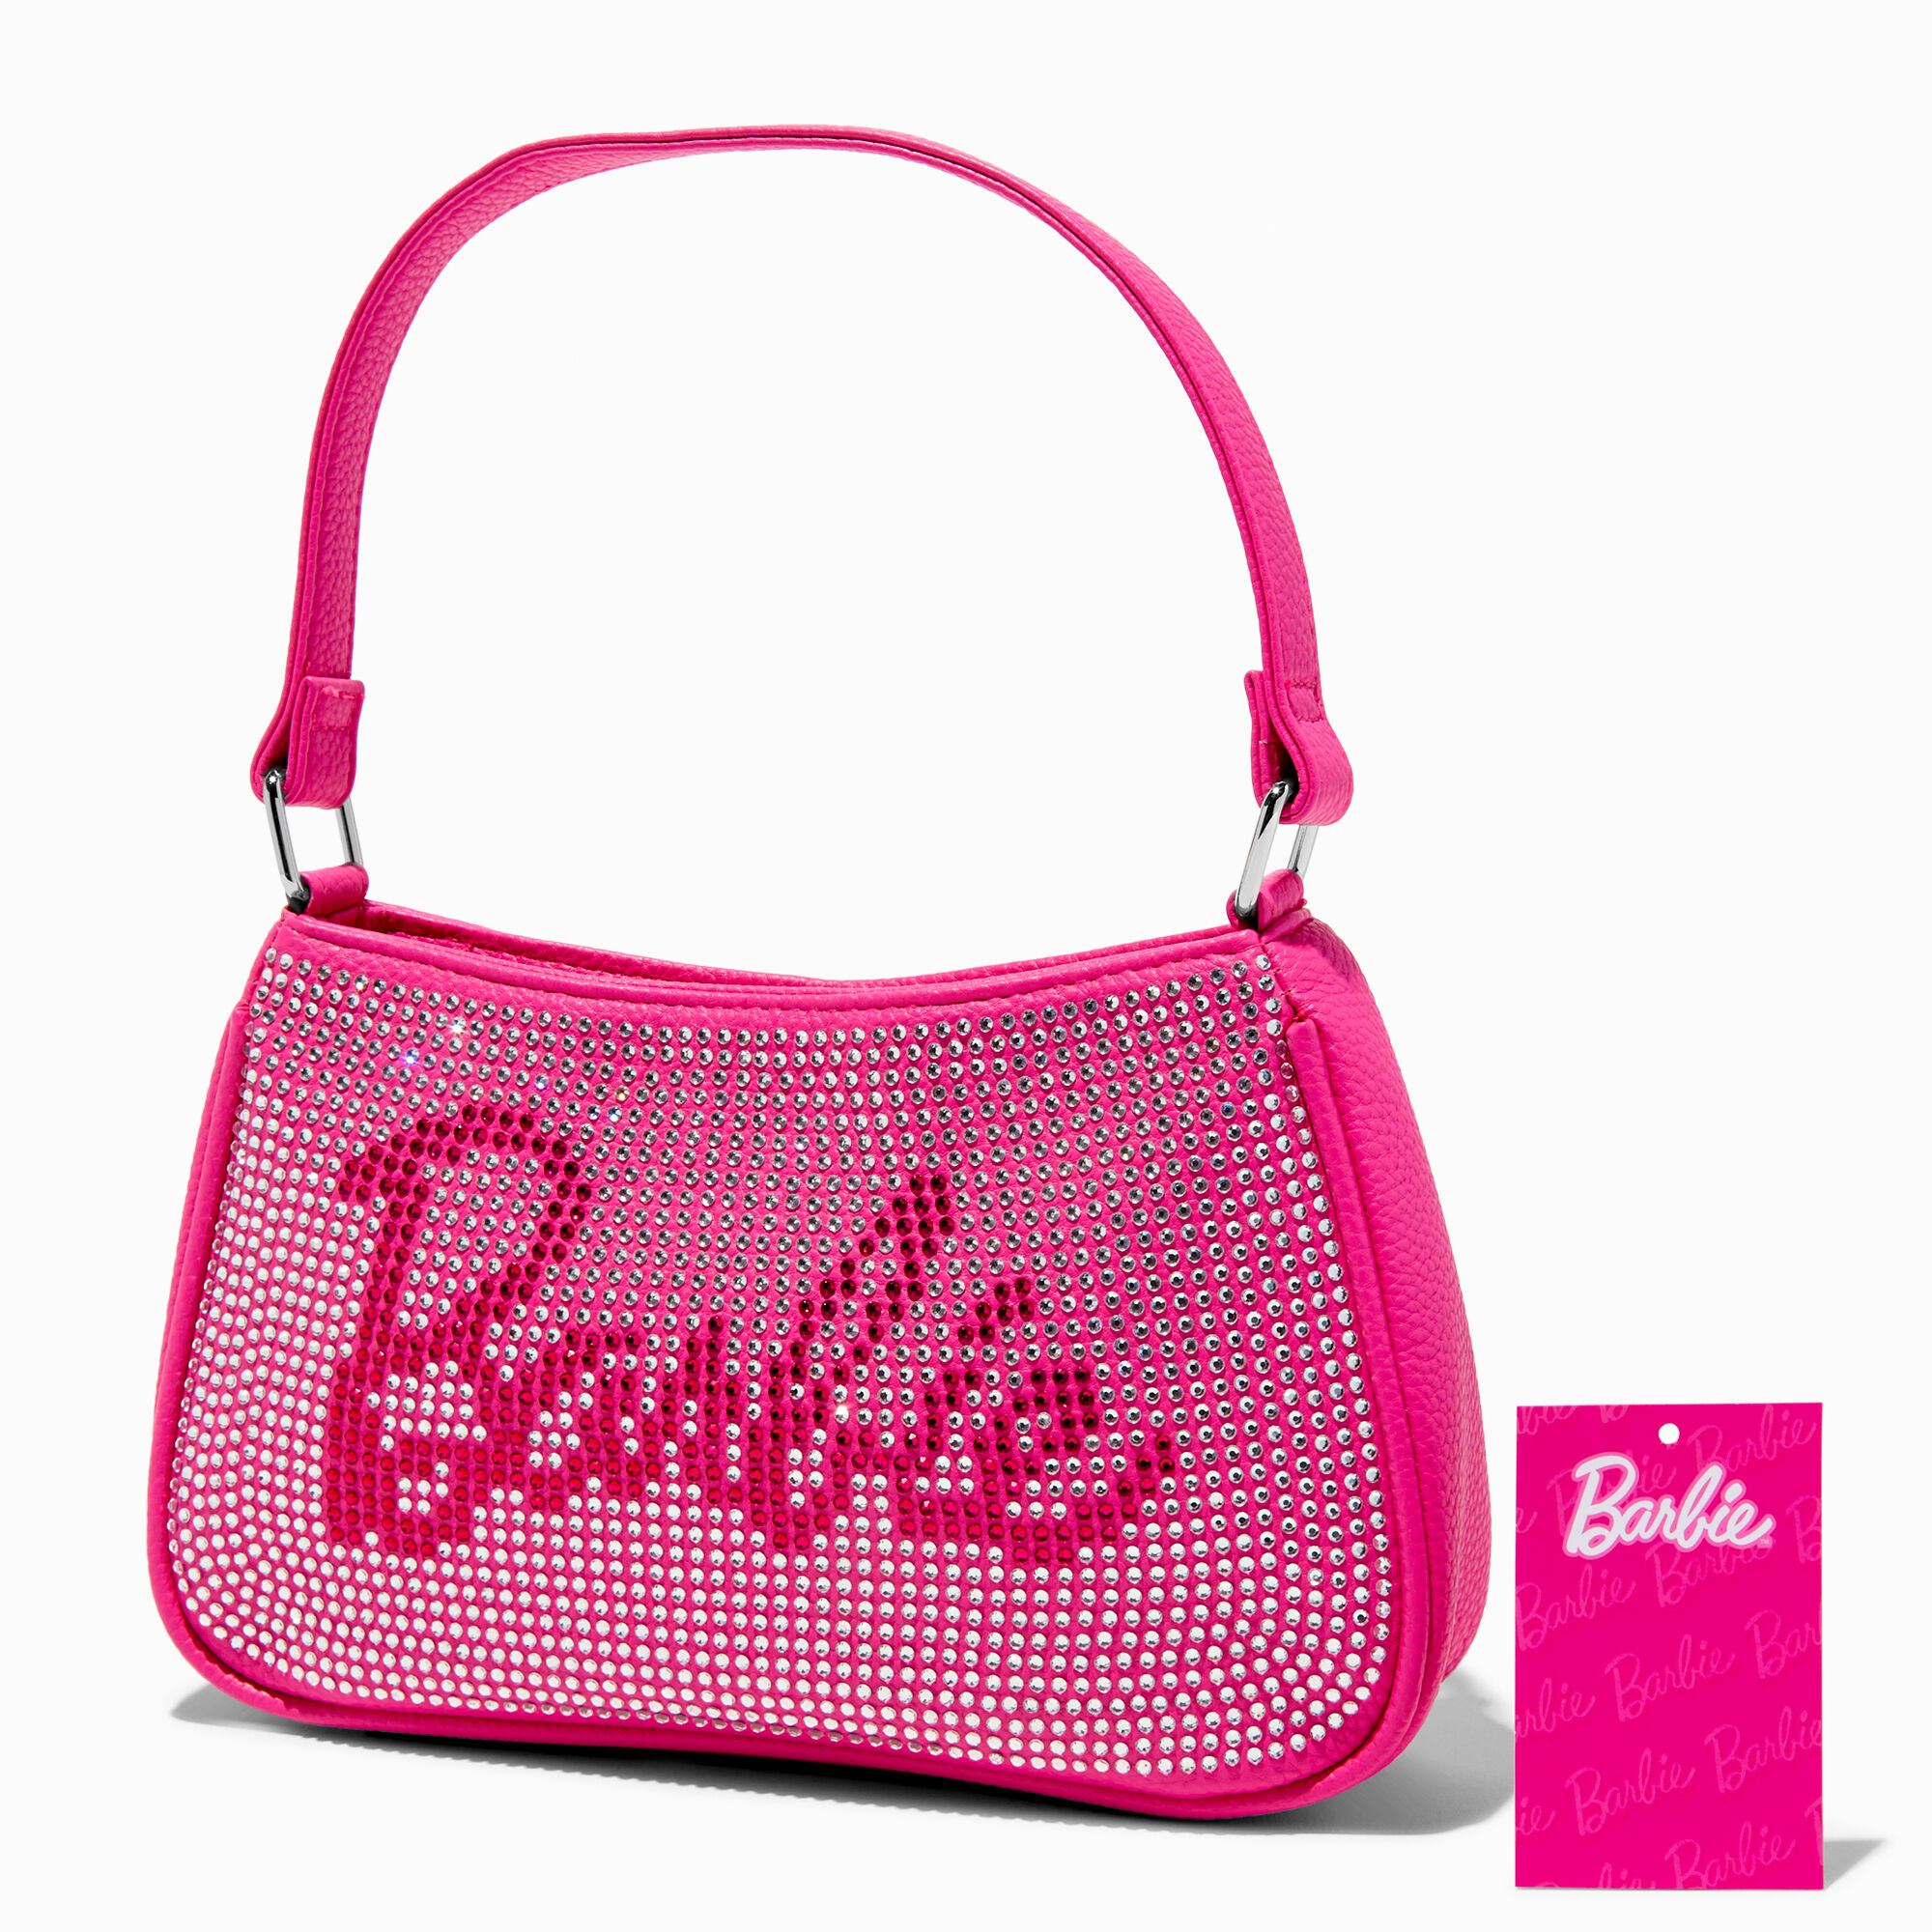 Barbie Bag,Carrier Bag,Pink Plastic Barbie,Party Favor,Birthday Gift -  Walmart.com